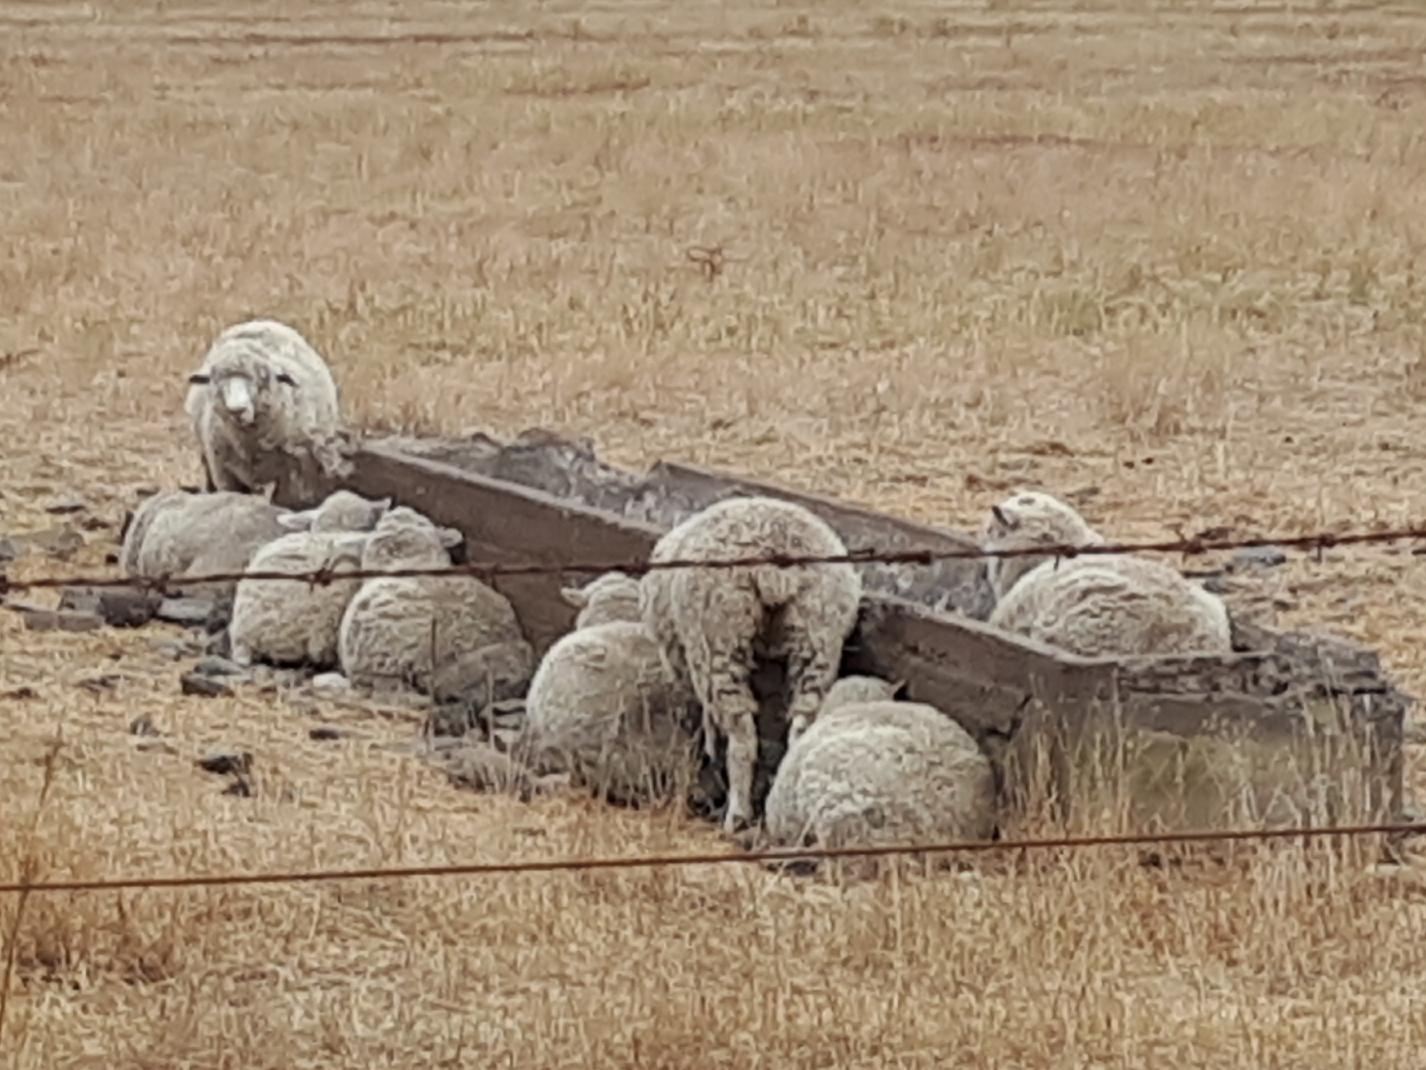 Australia No Longer ‘Rides on the Sheep’s Back’